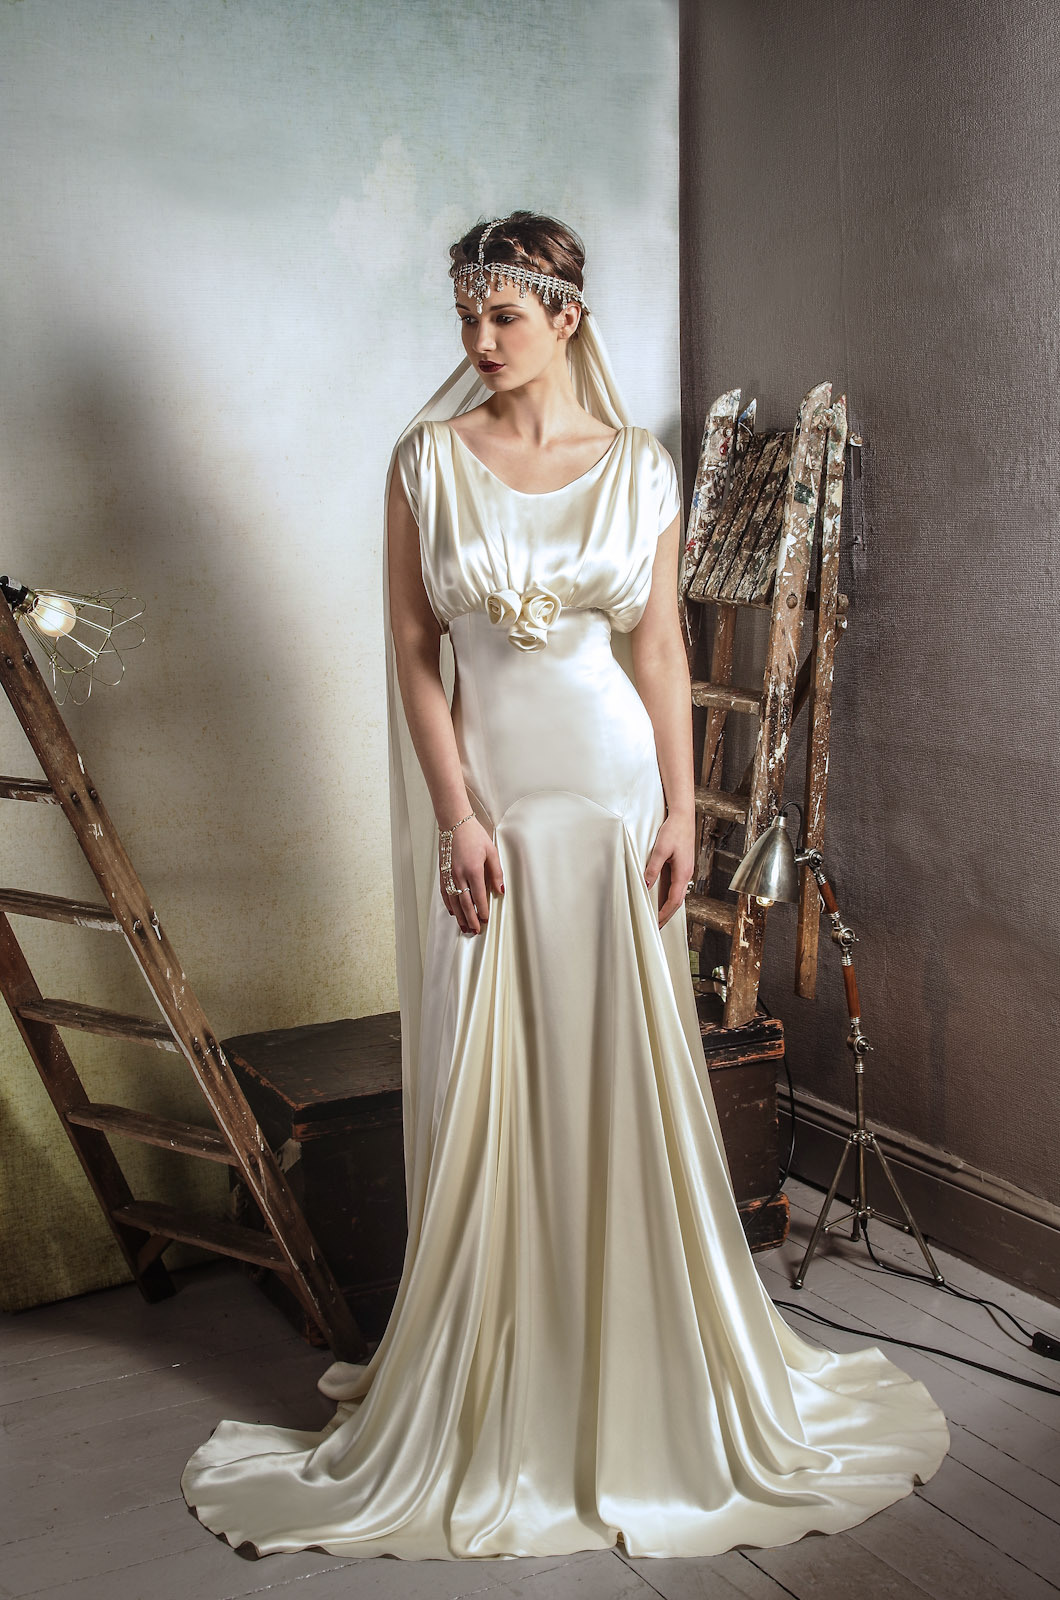 Belle & Bunty's 2014 Bridal Capsule Collection - Belle